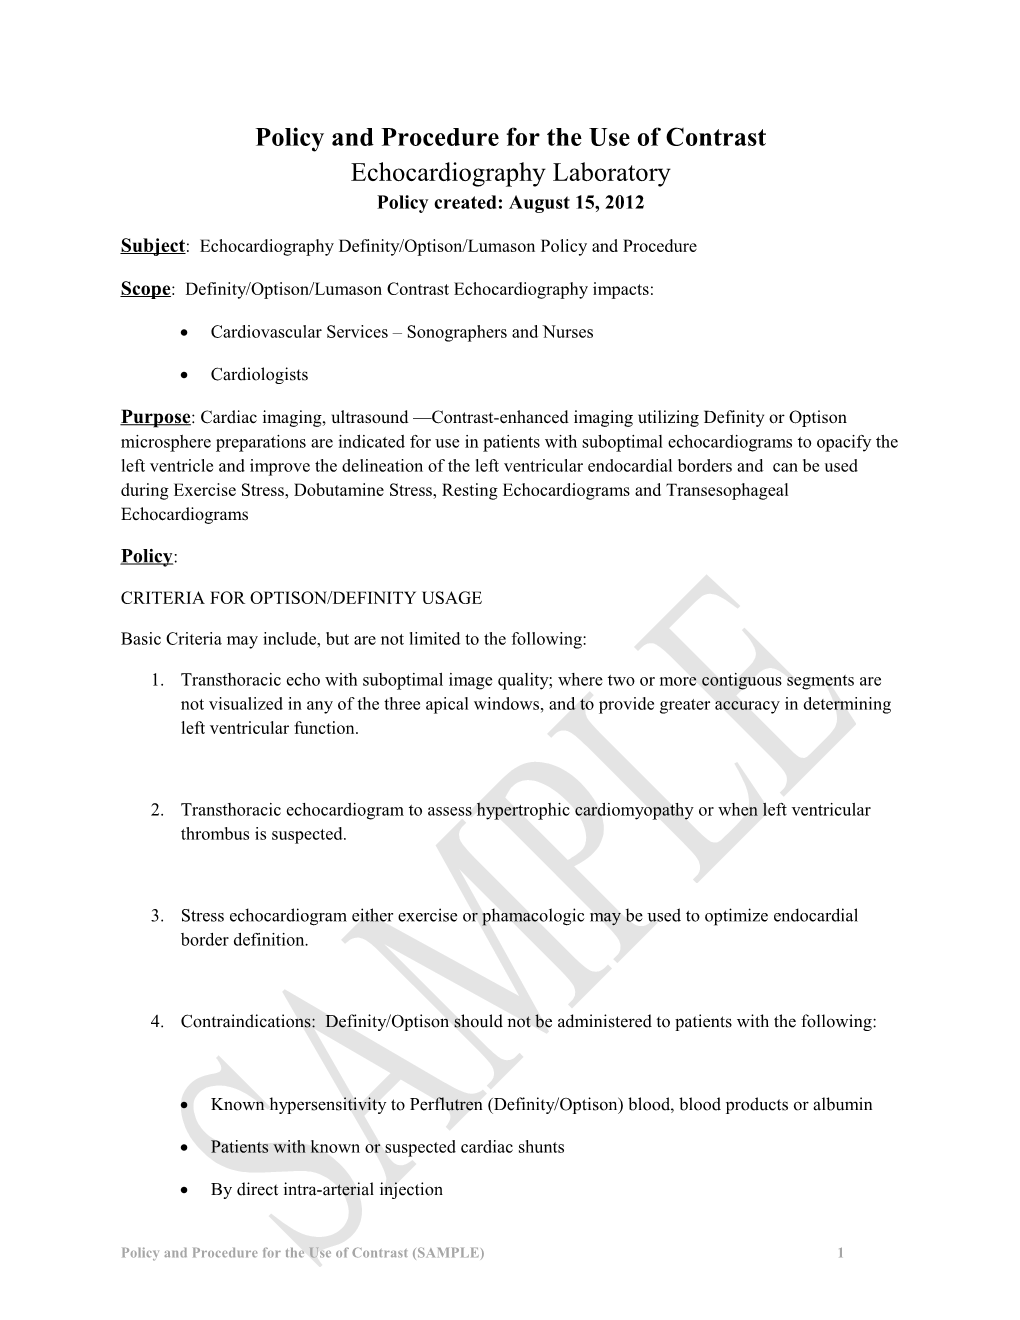 Subject: Echocardiography Definity/Optison/Lumason Policy and Procedure